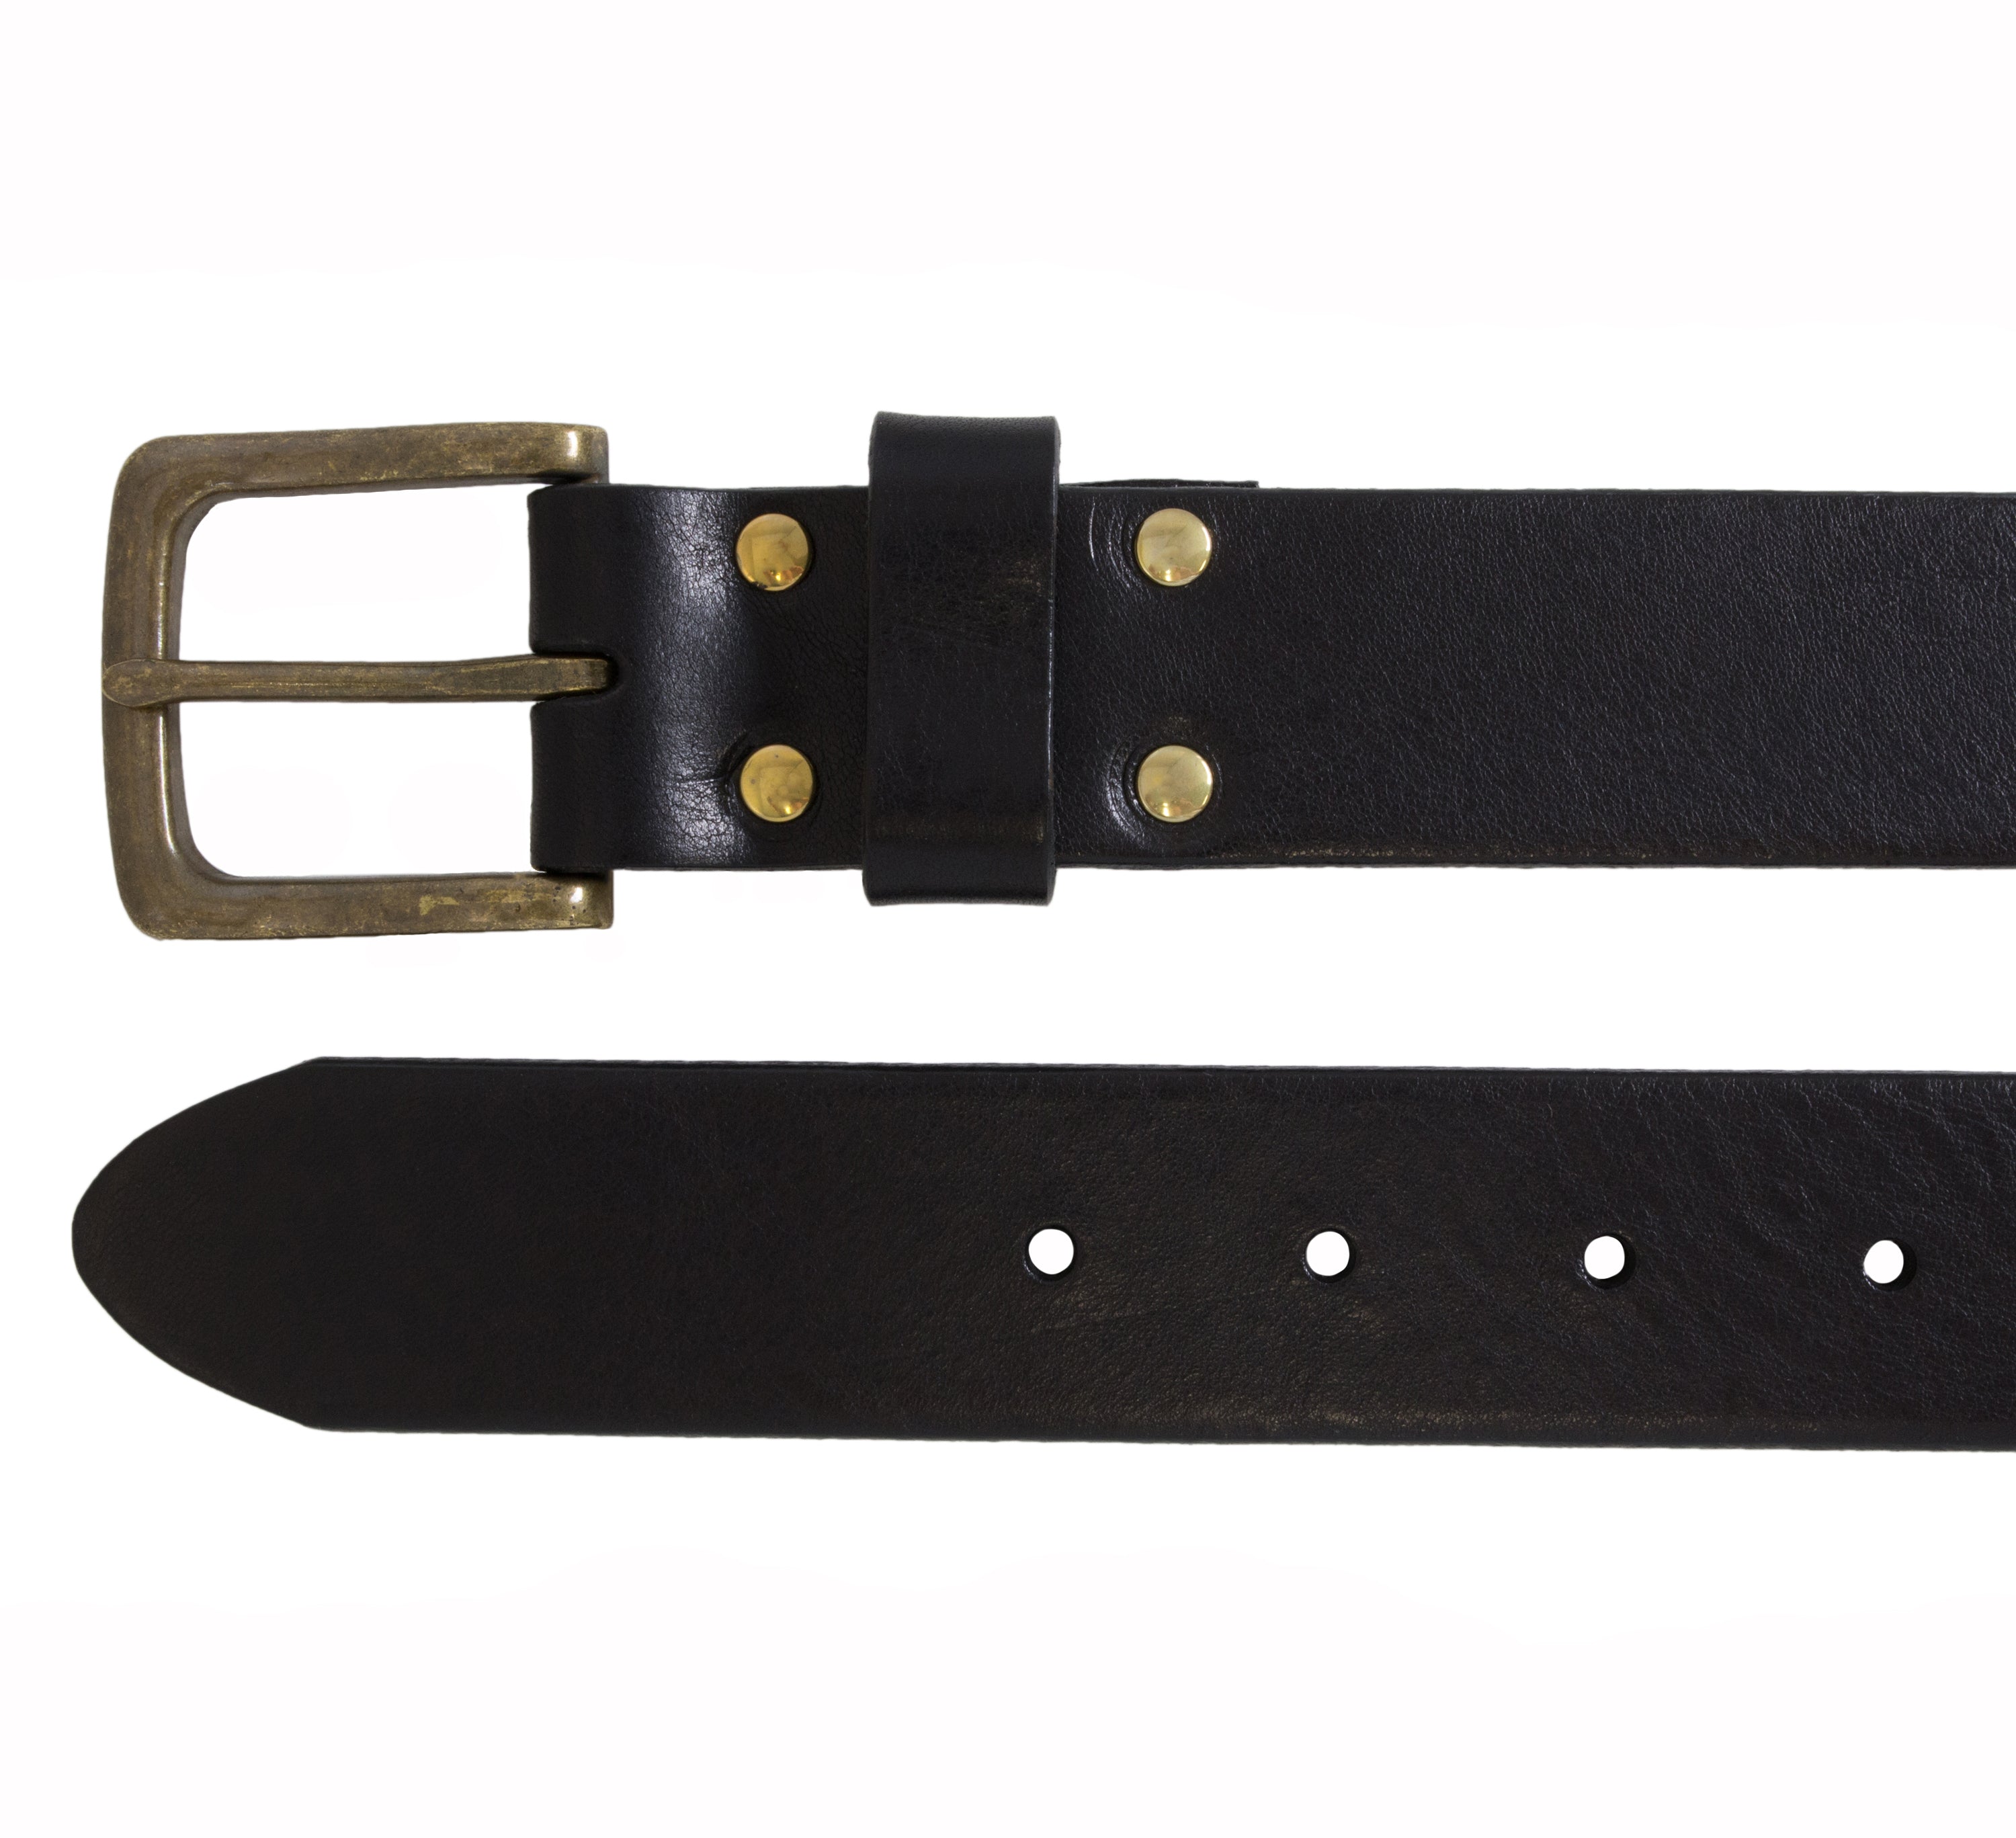 Italian full-grain tumbled leather belt